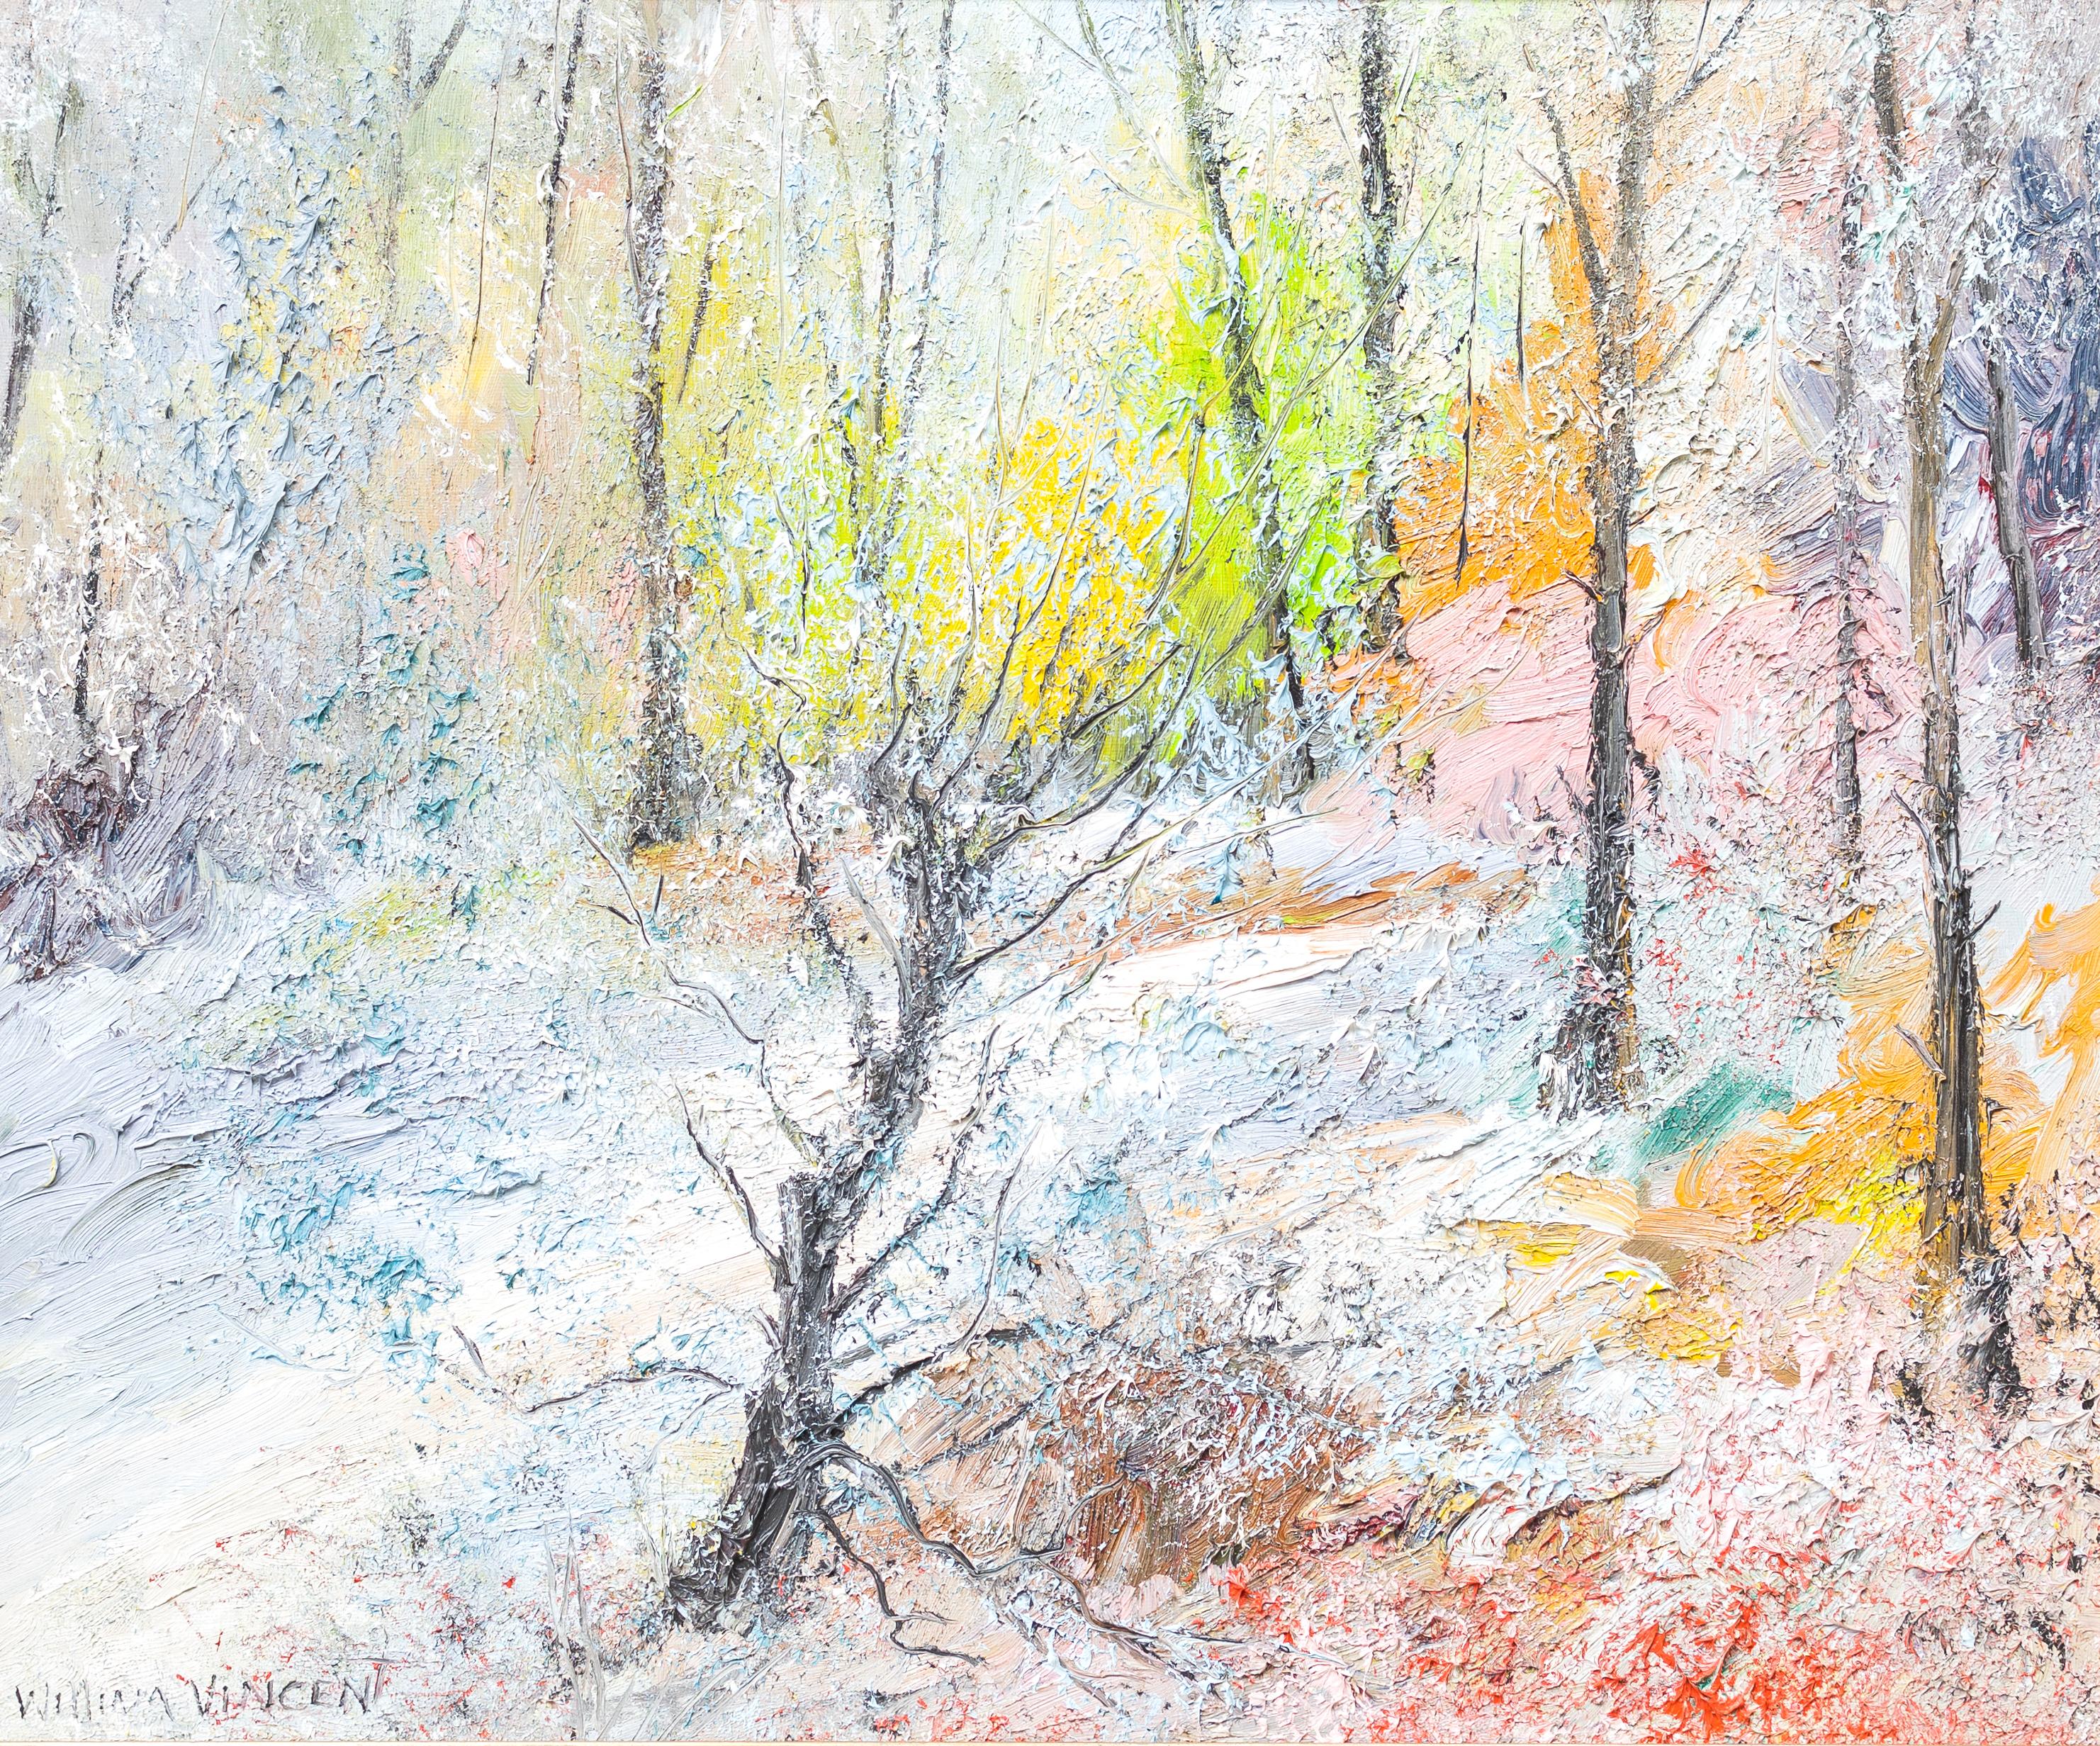 William Vincent Kirkpatrick Landscape Painting - "Southern Woods" Impressionistic Snowy Forest Landscape Scene